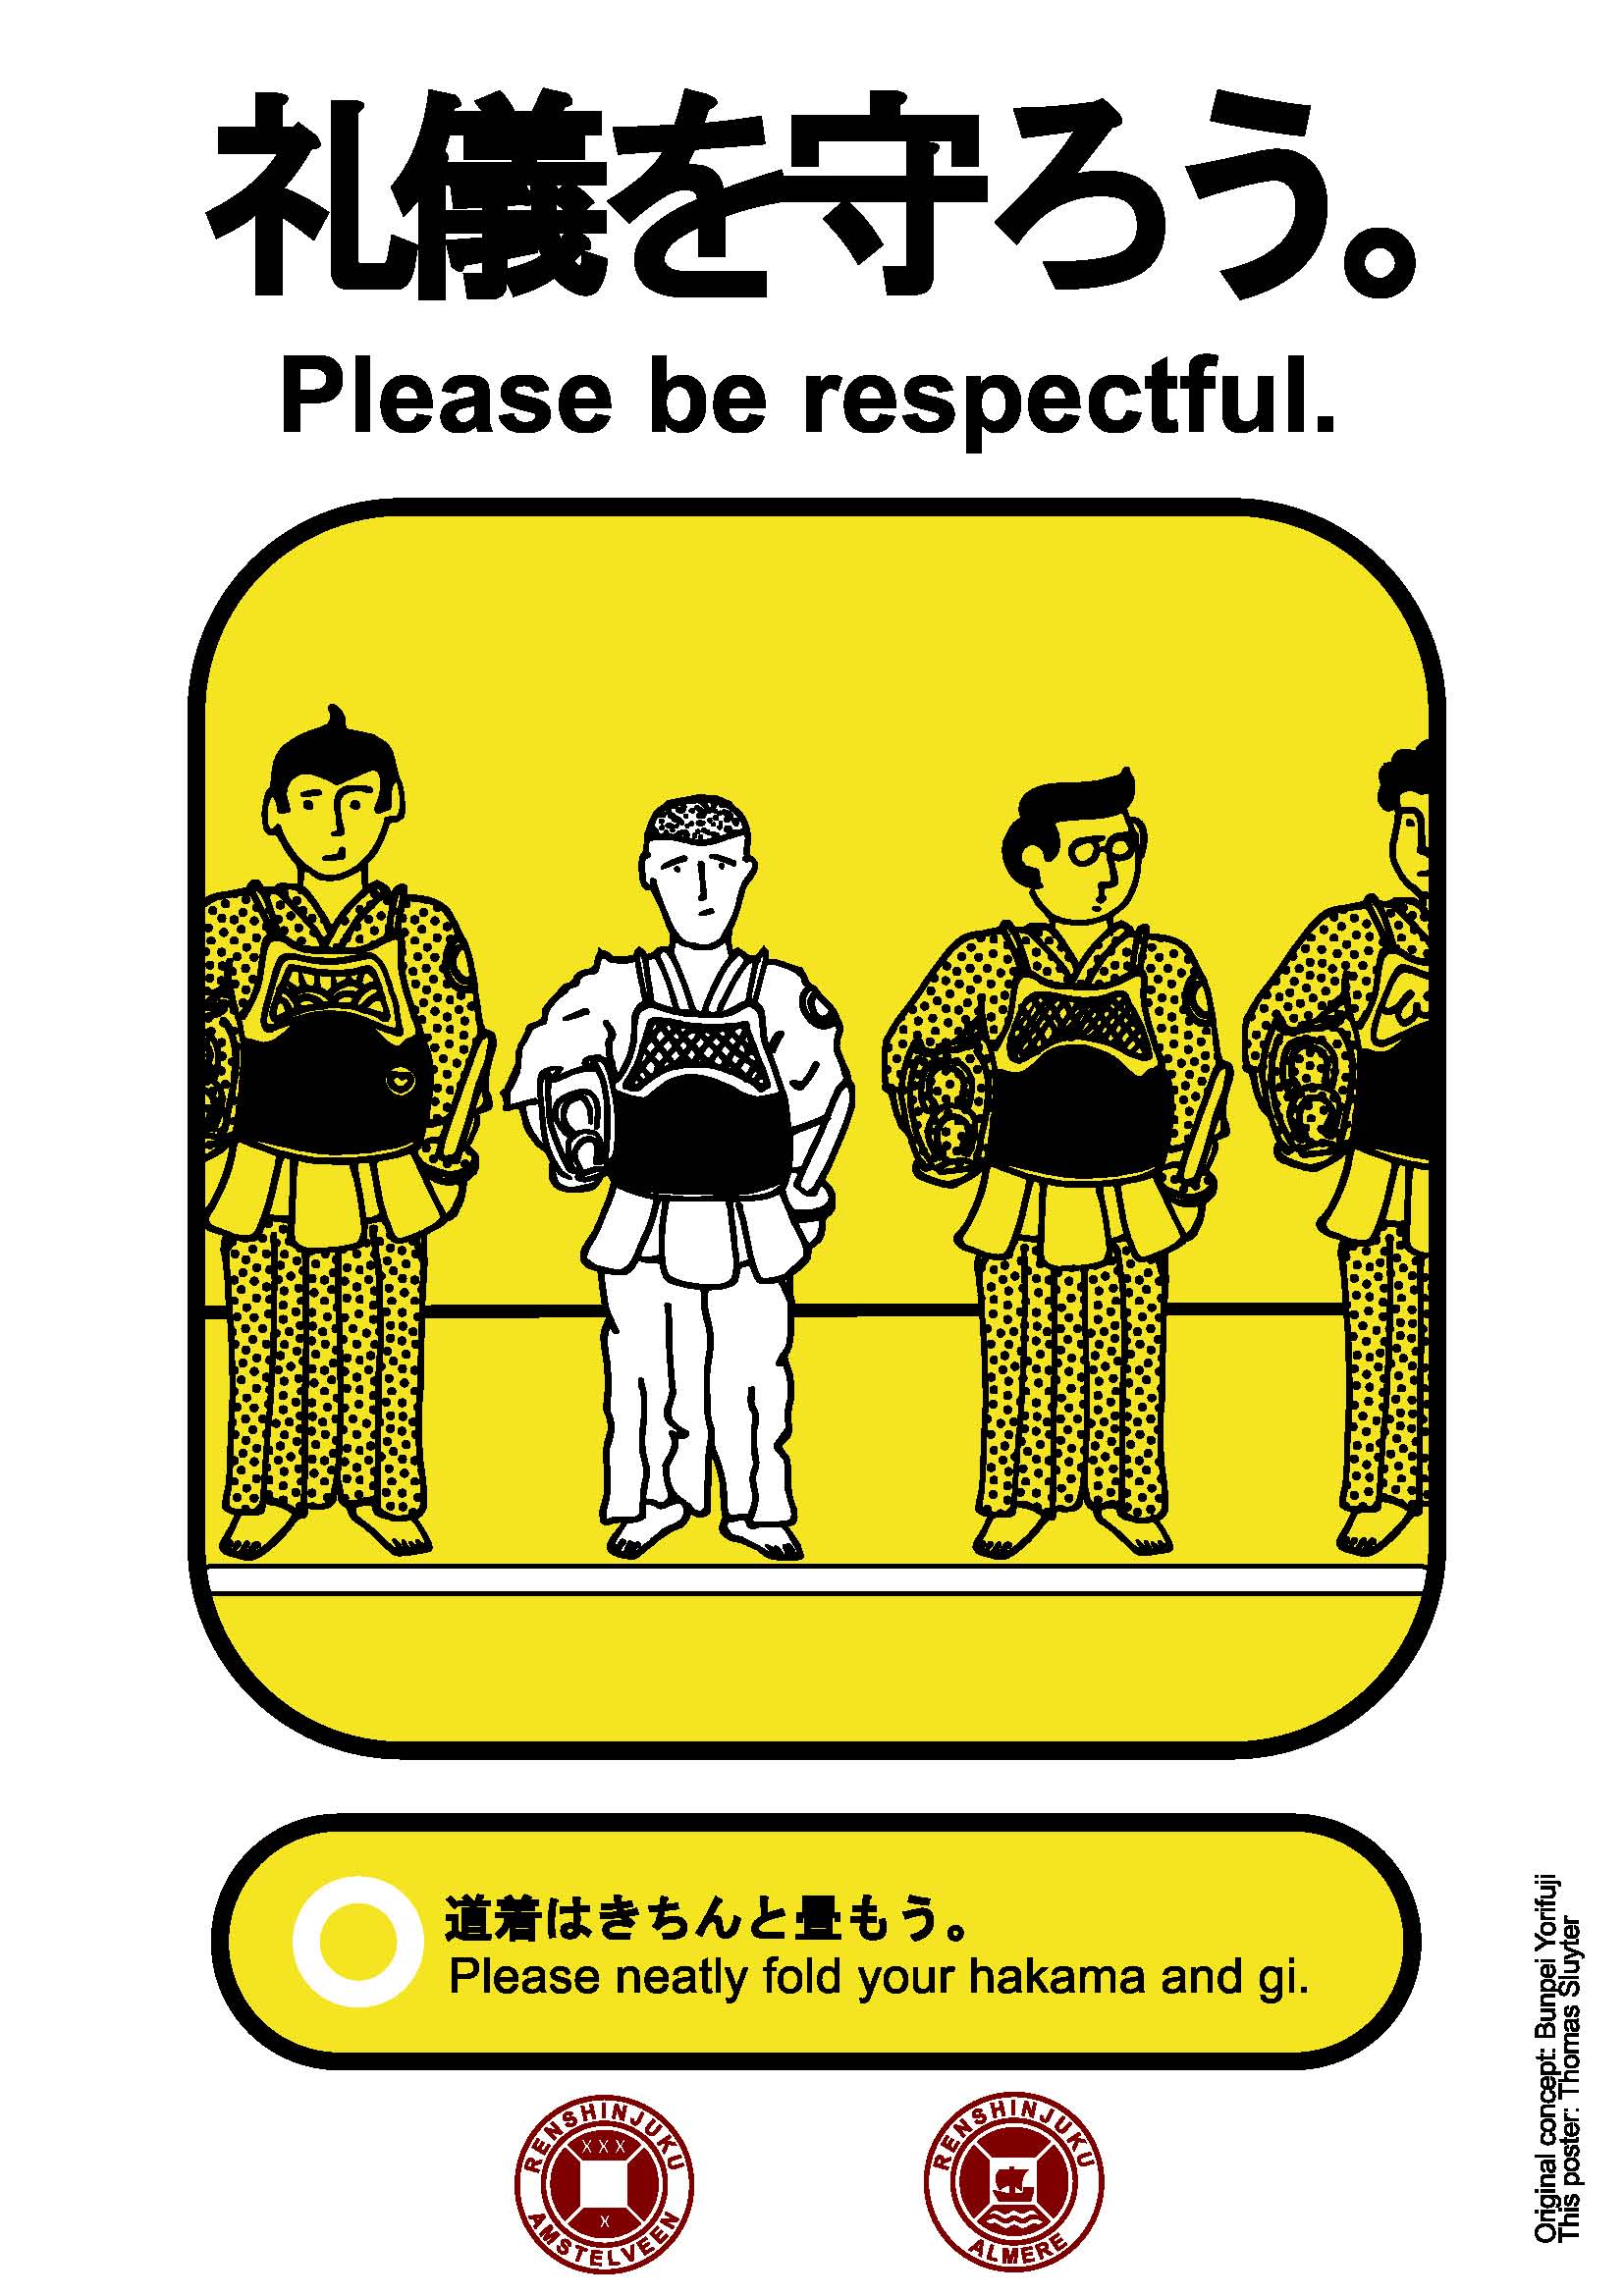 Respect-Uniform-EN